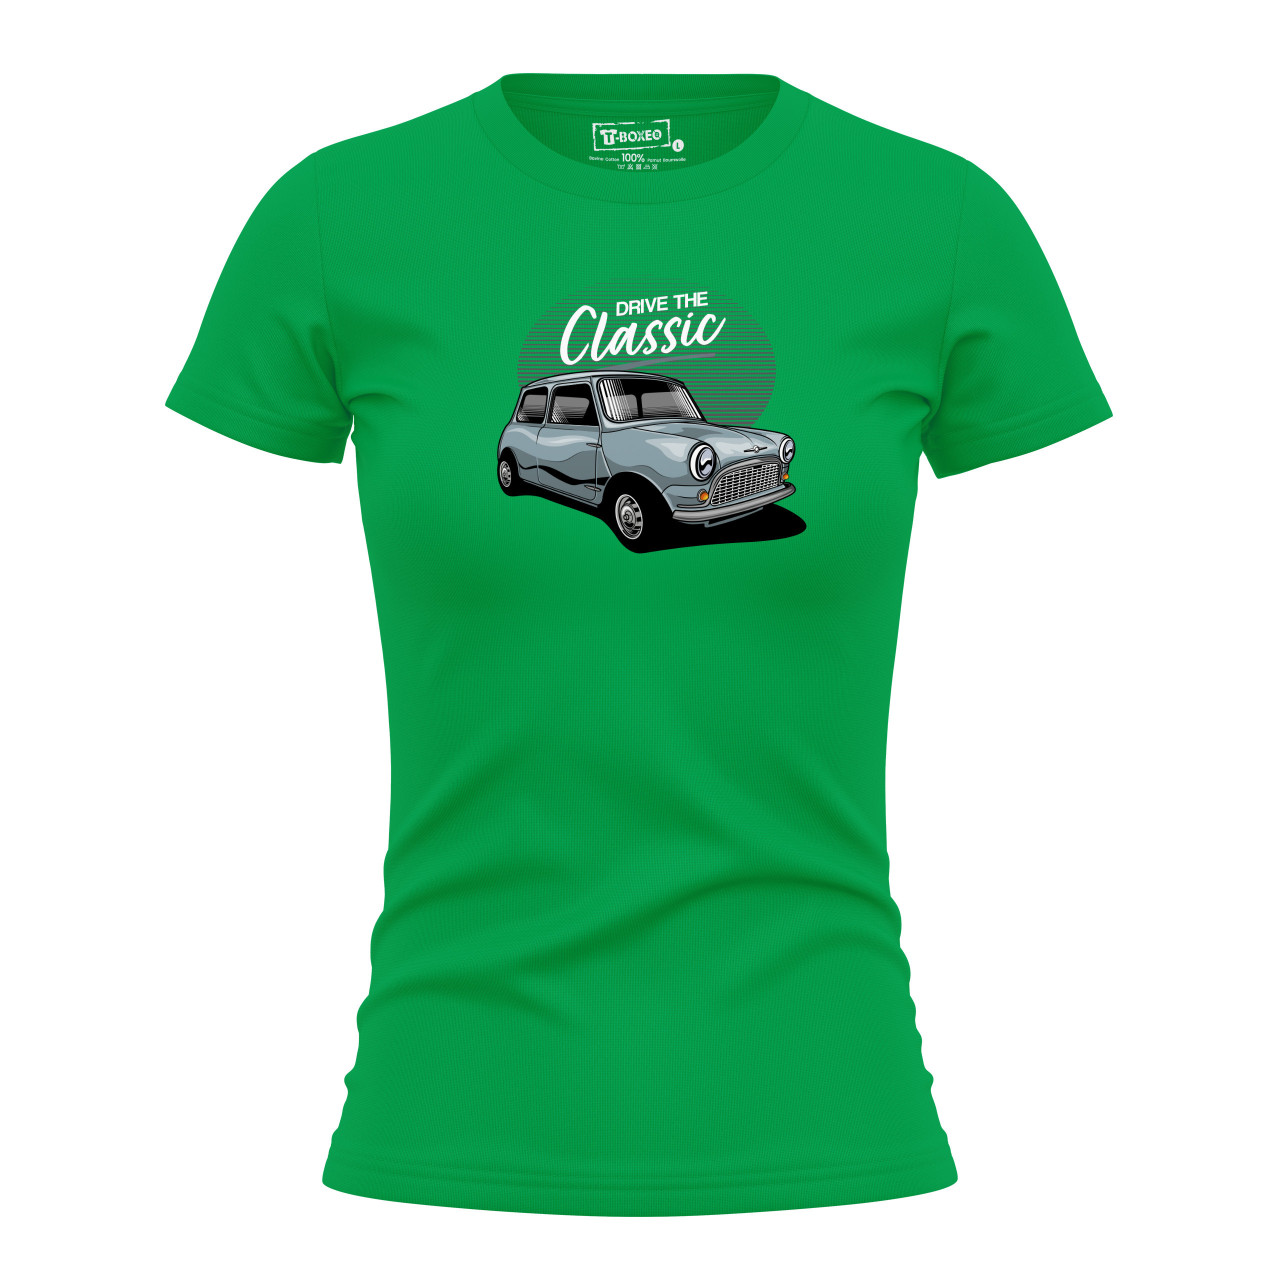 Dámské tričko s potiskem “Ride the Classic, modrý Austin mini"